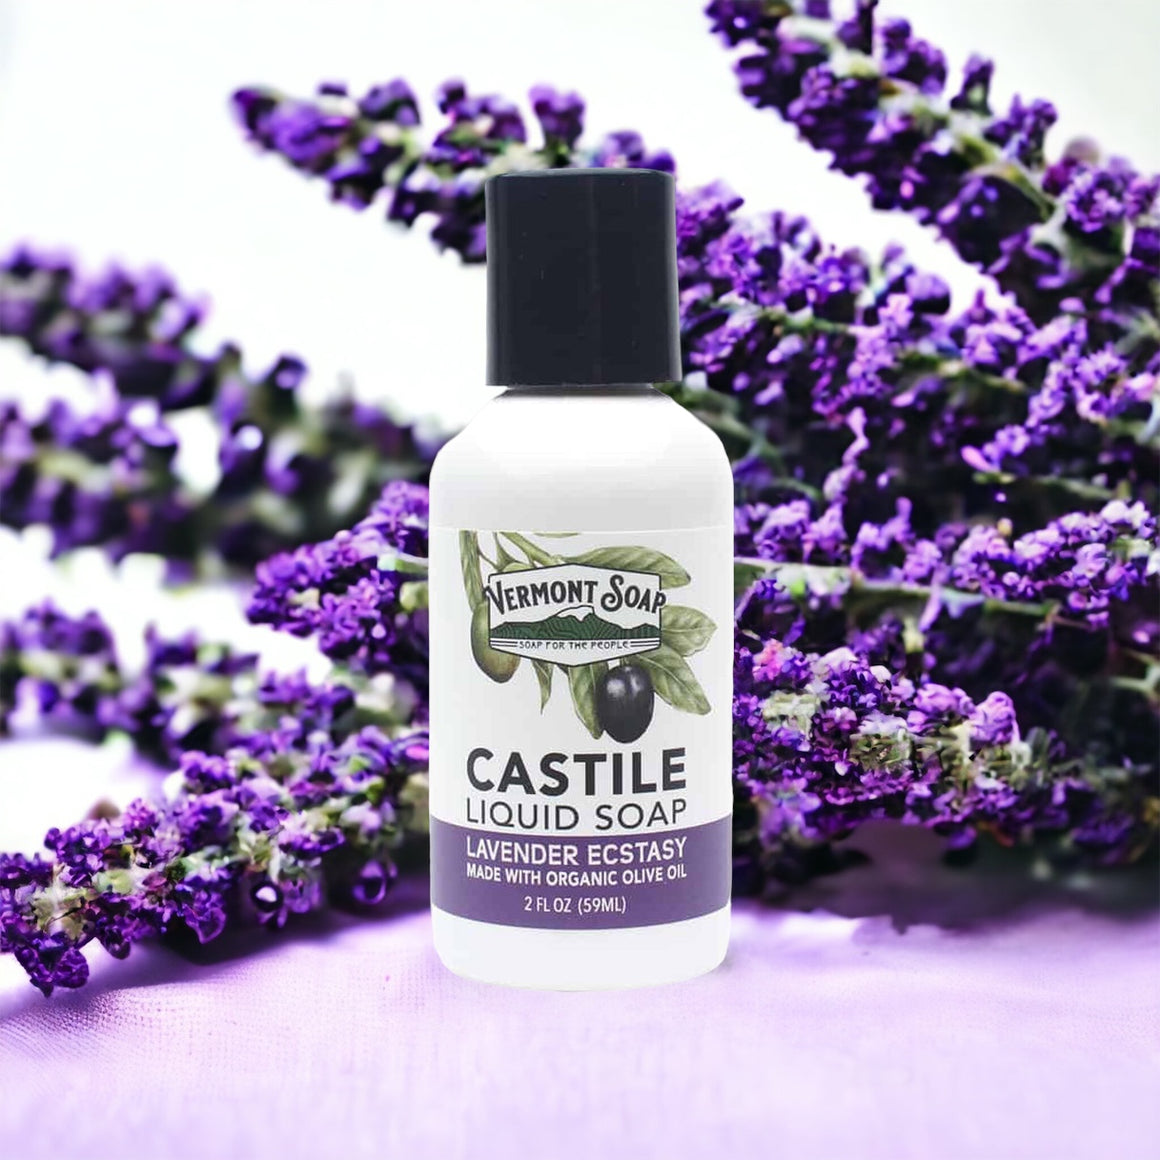 Lavender Ecstasy Castile Liquid Soap - Vermont Soap